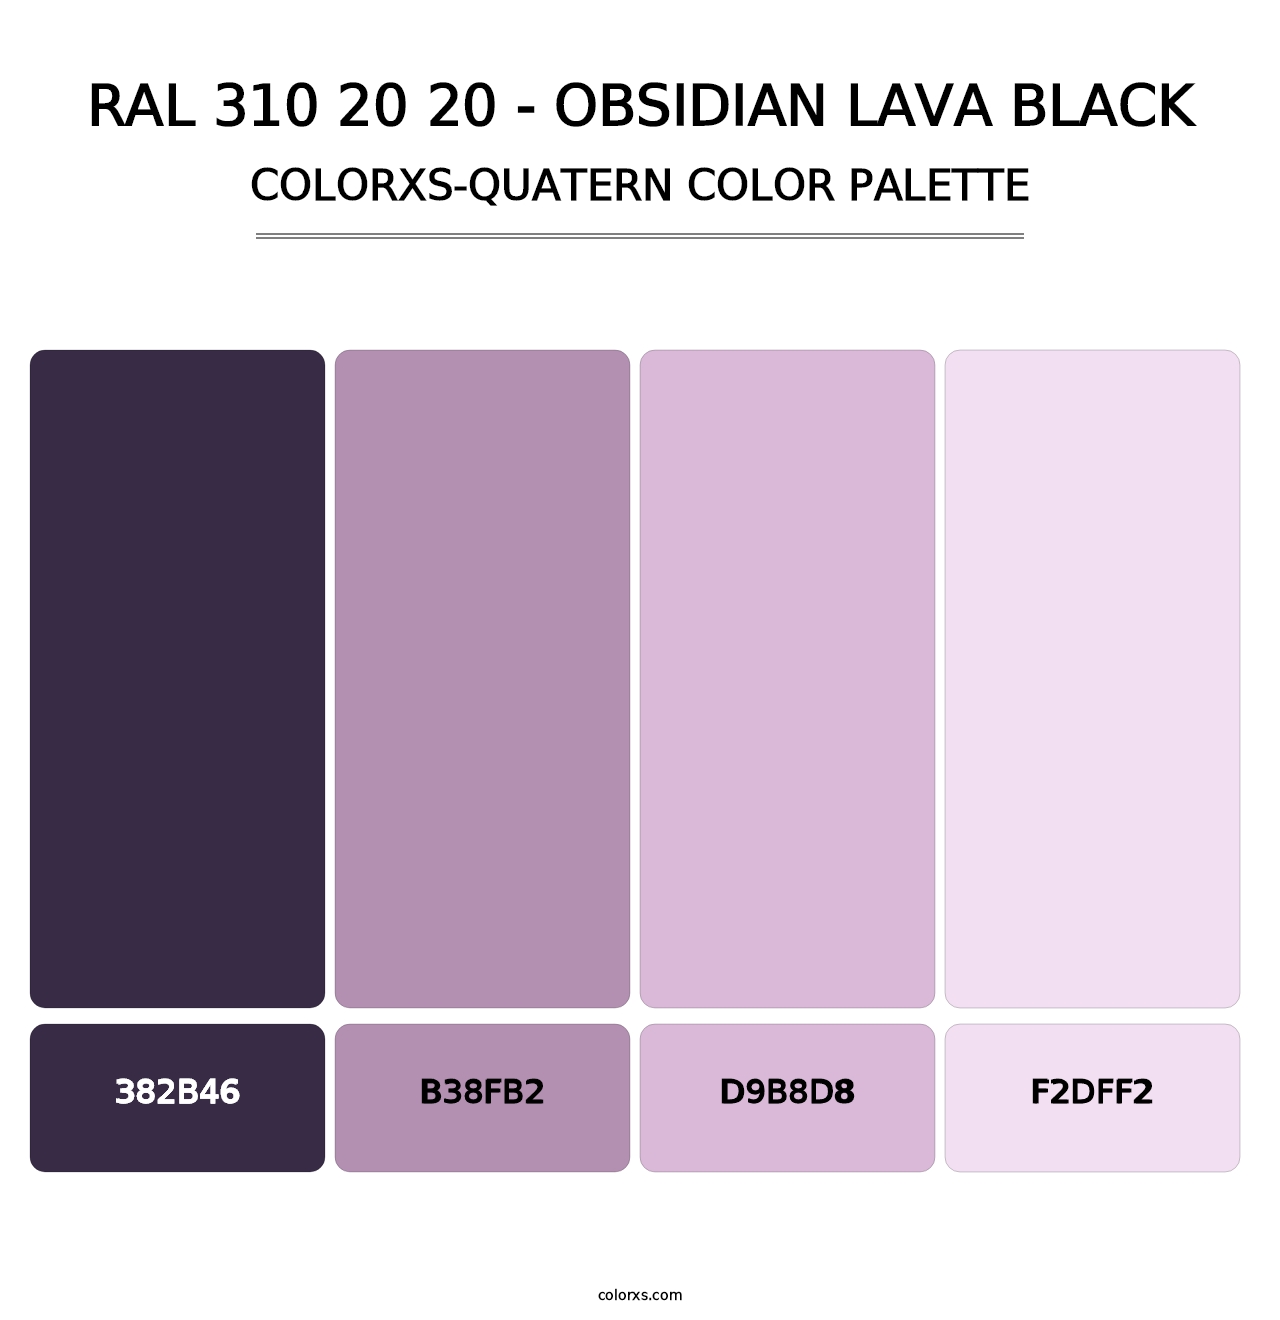 RAL 310 20 20 - Obsidian Lava Black - Colorxs Quatern Palette